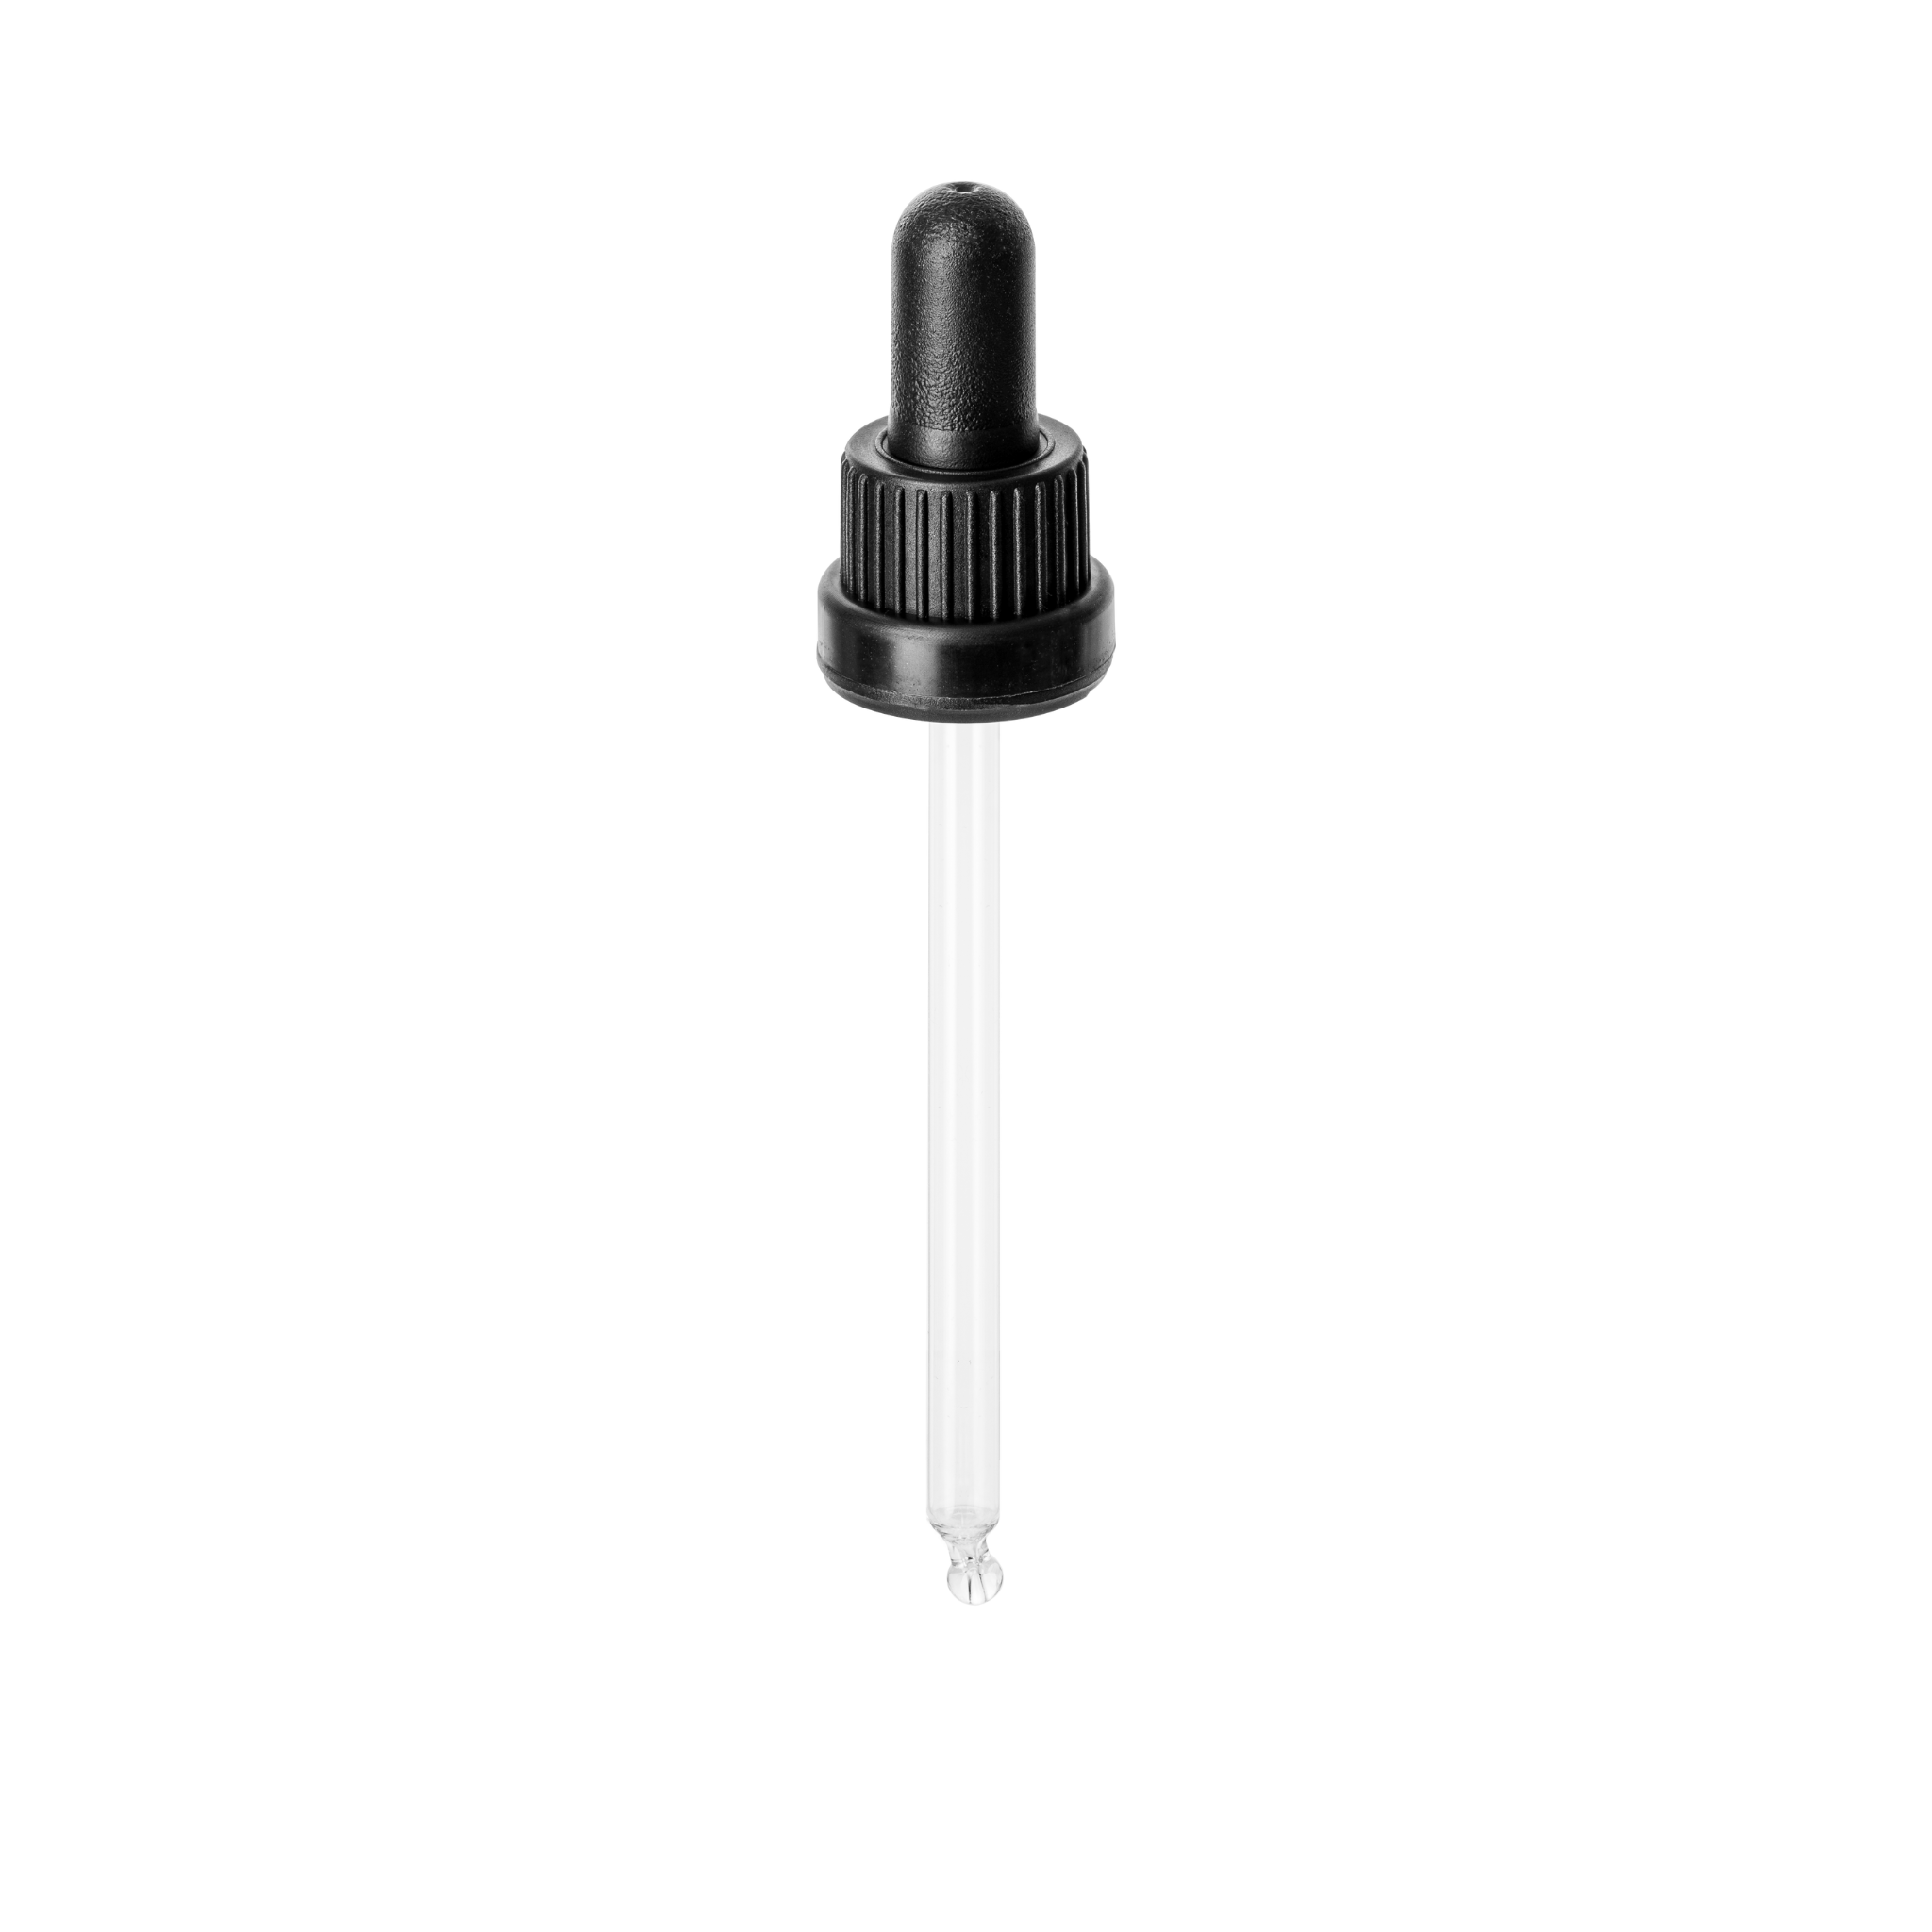 Pipette tamper evident DIN18, III, black, ribbed, bulb NBR, dose 1.0ml, bent ball tip (Orion 50)